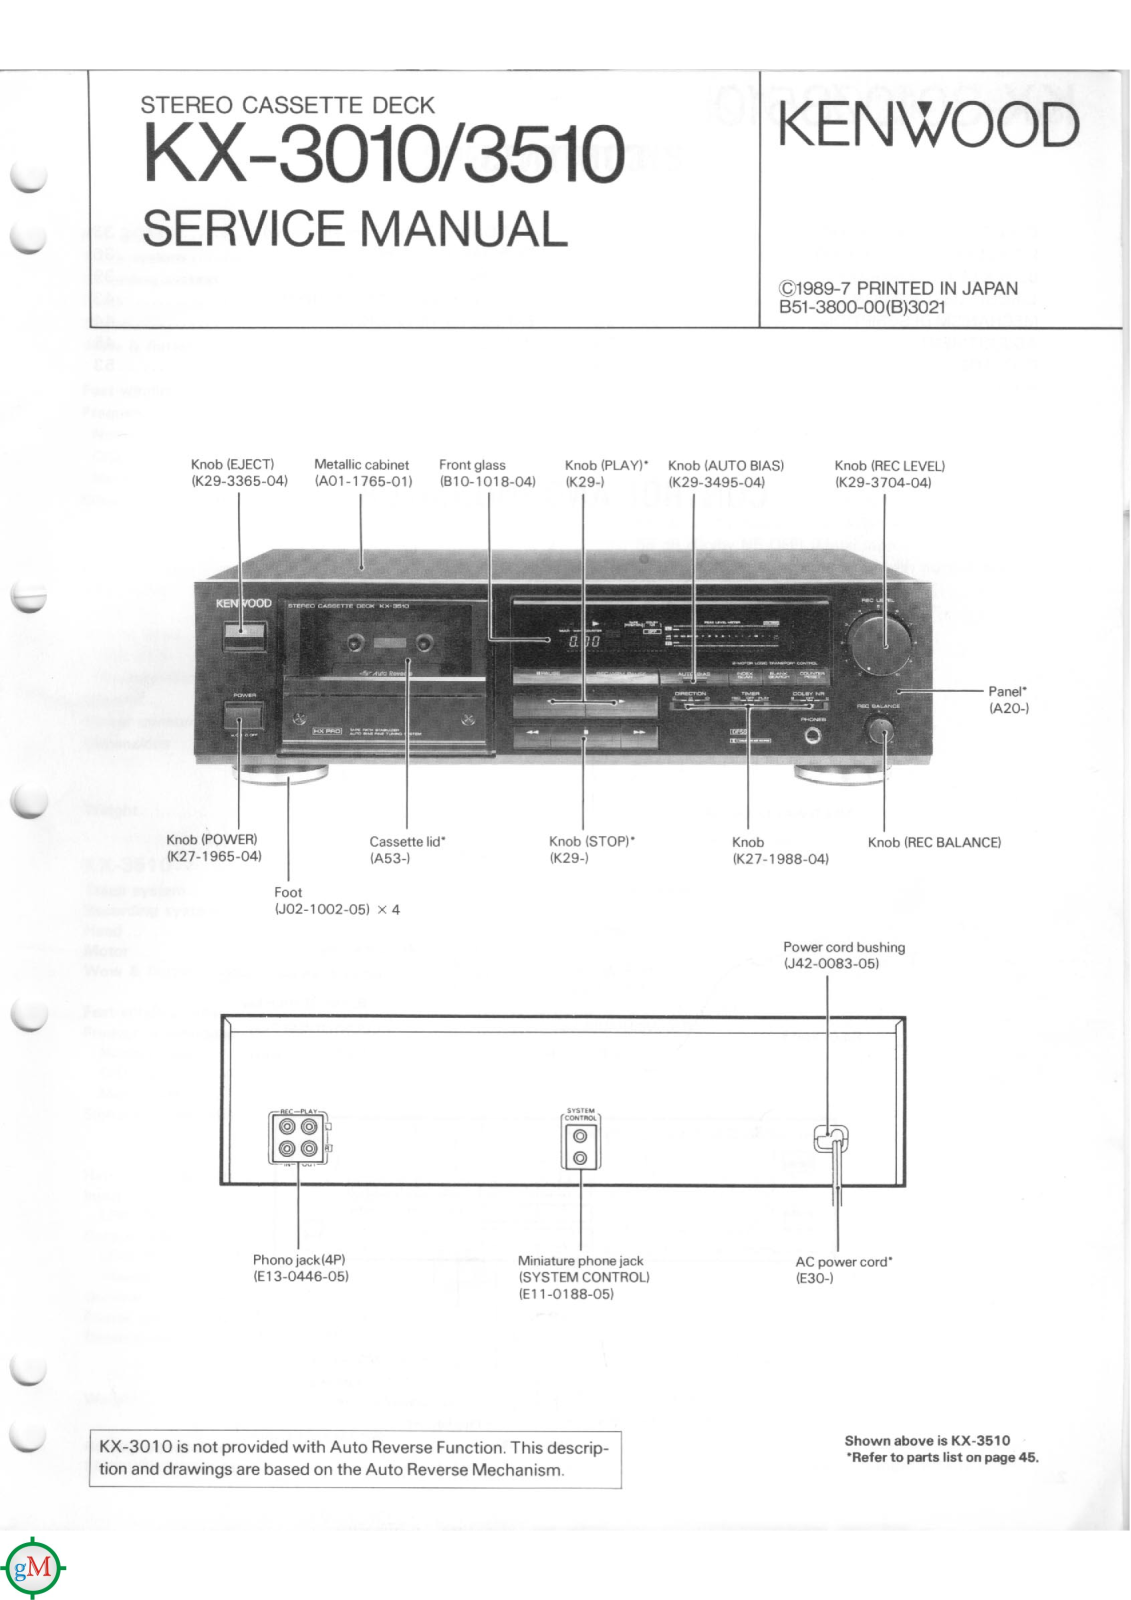 Kenwood KX-3010, KX-3510 Service manual